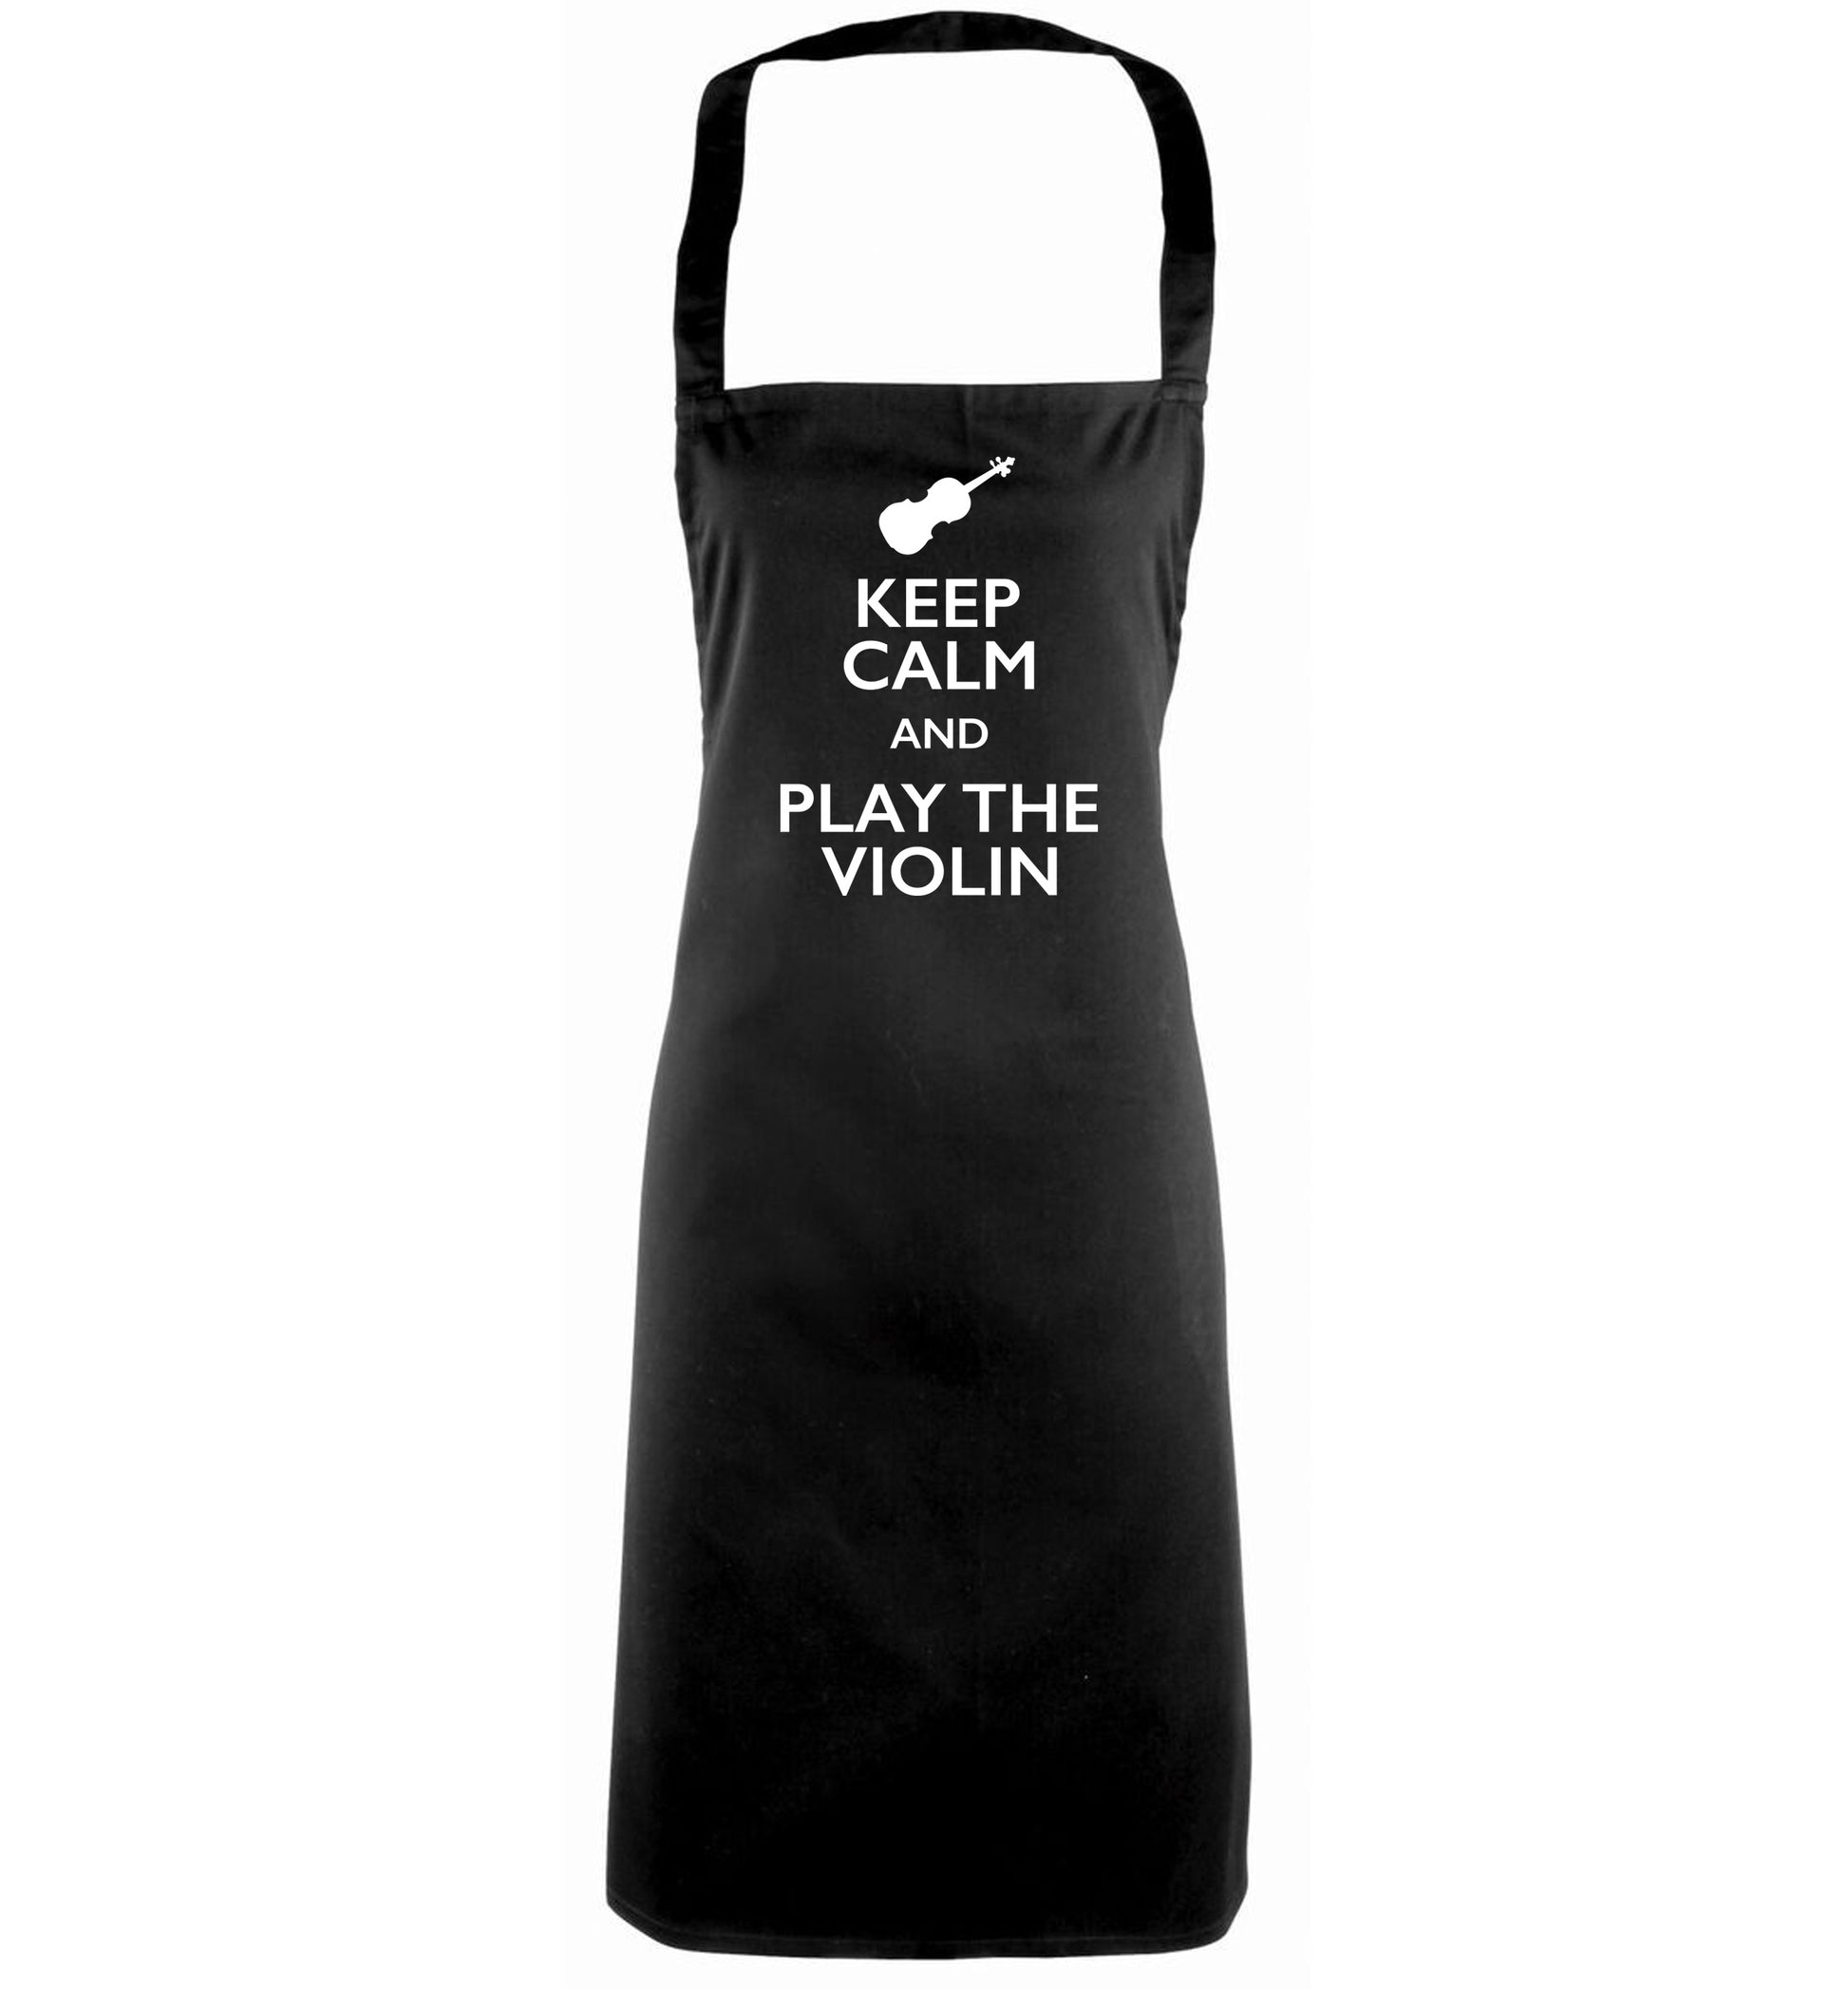 Keep calm and play the violin black apron